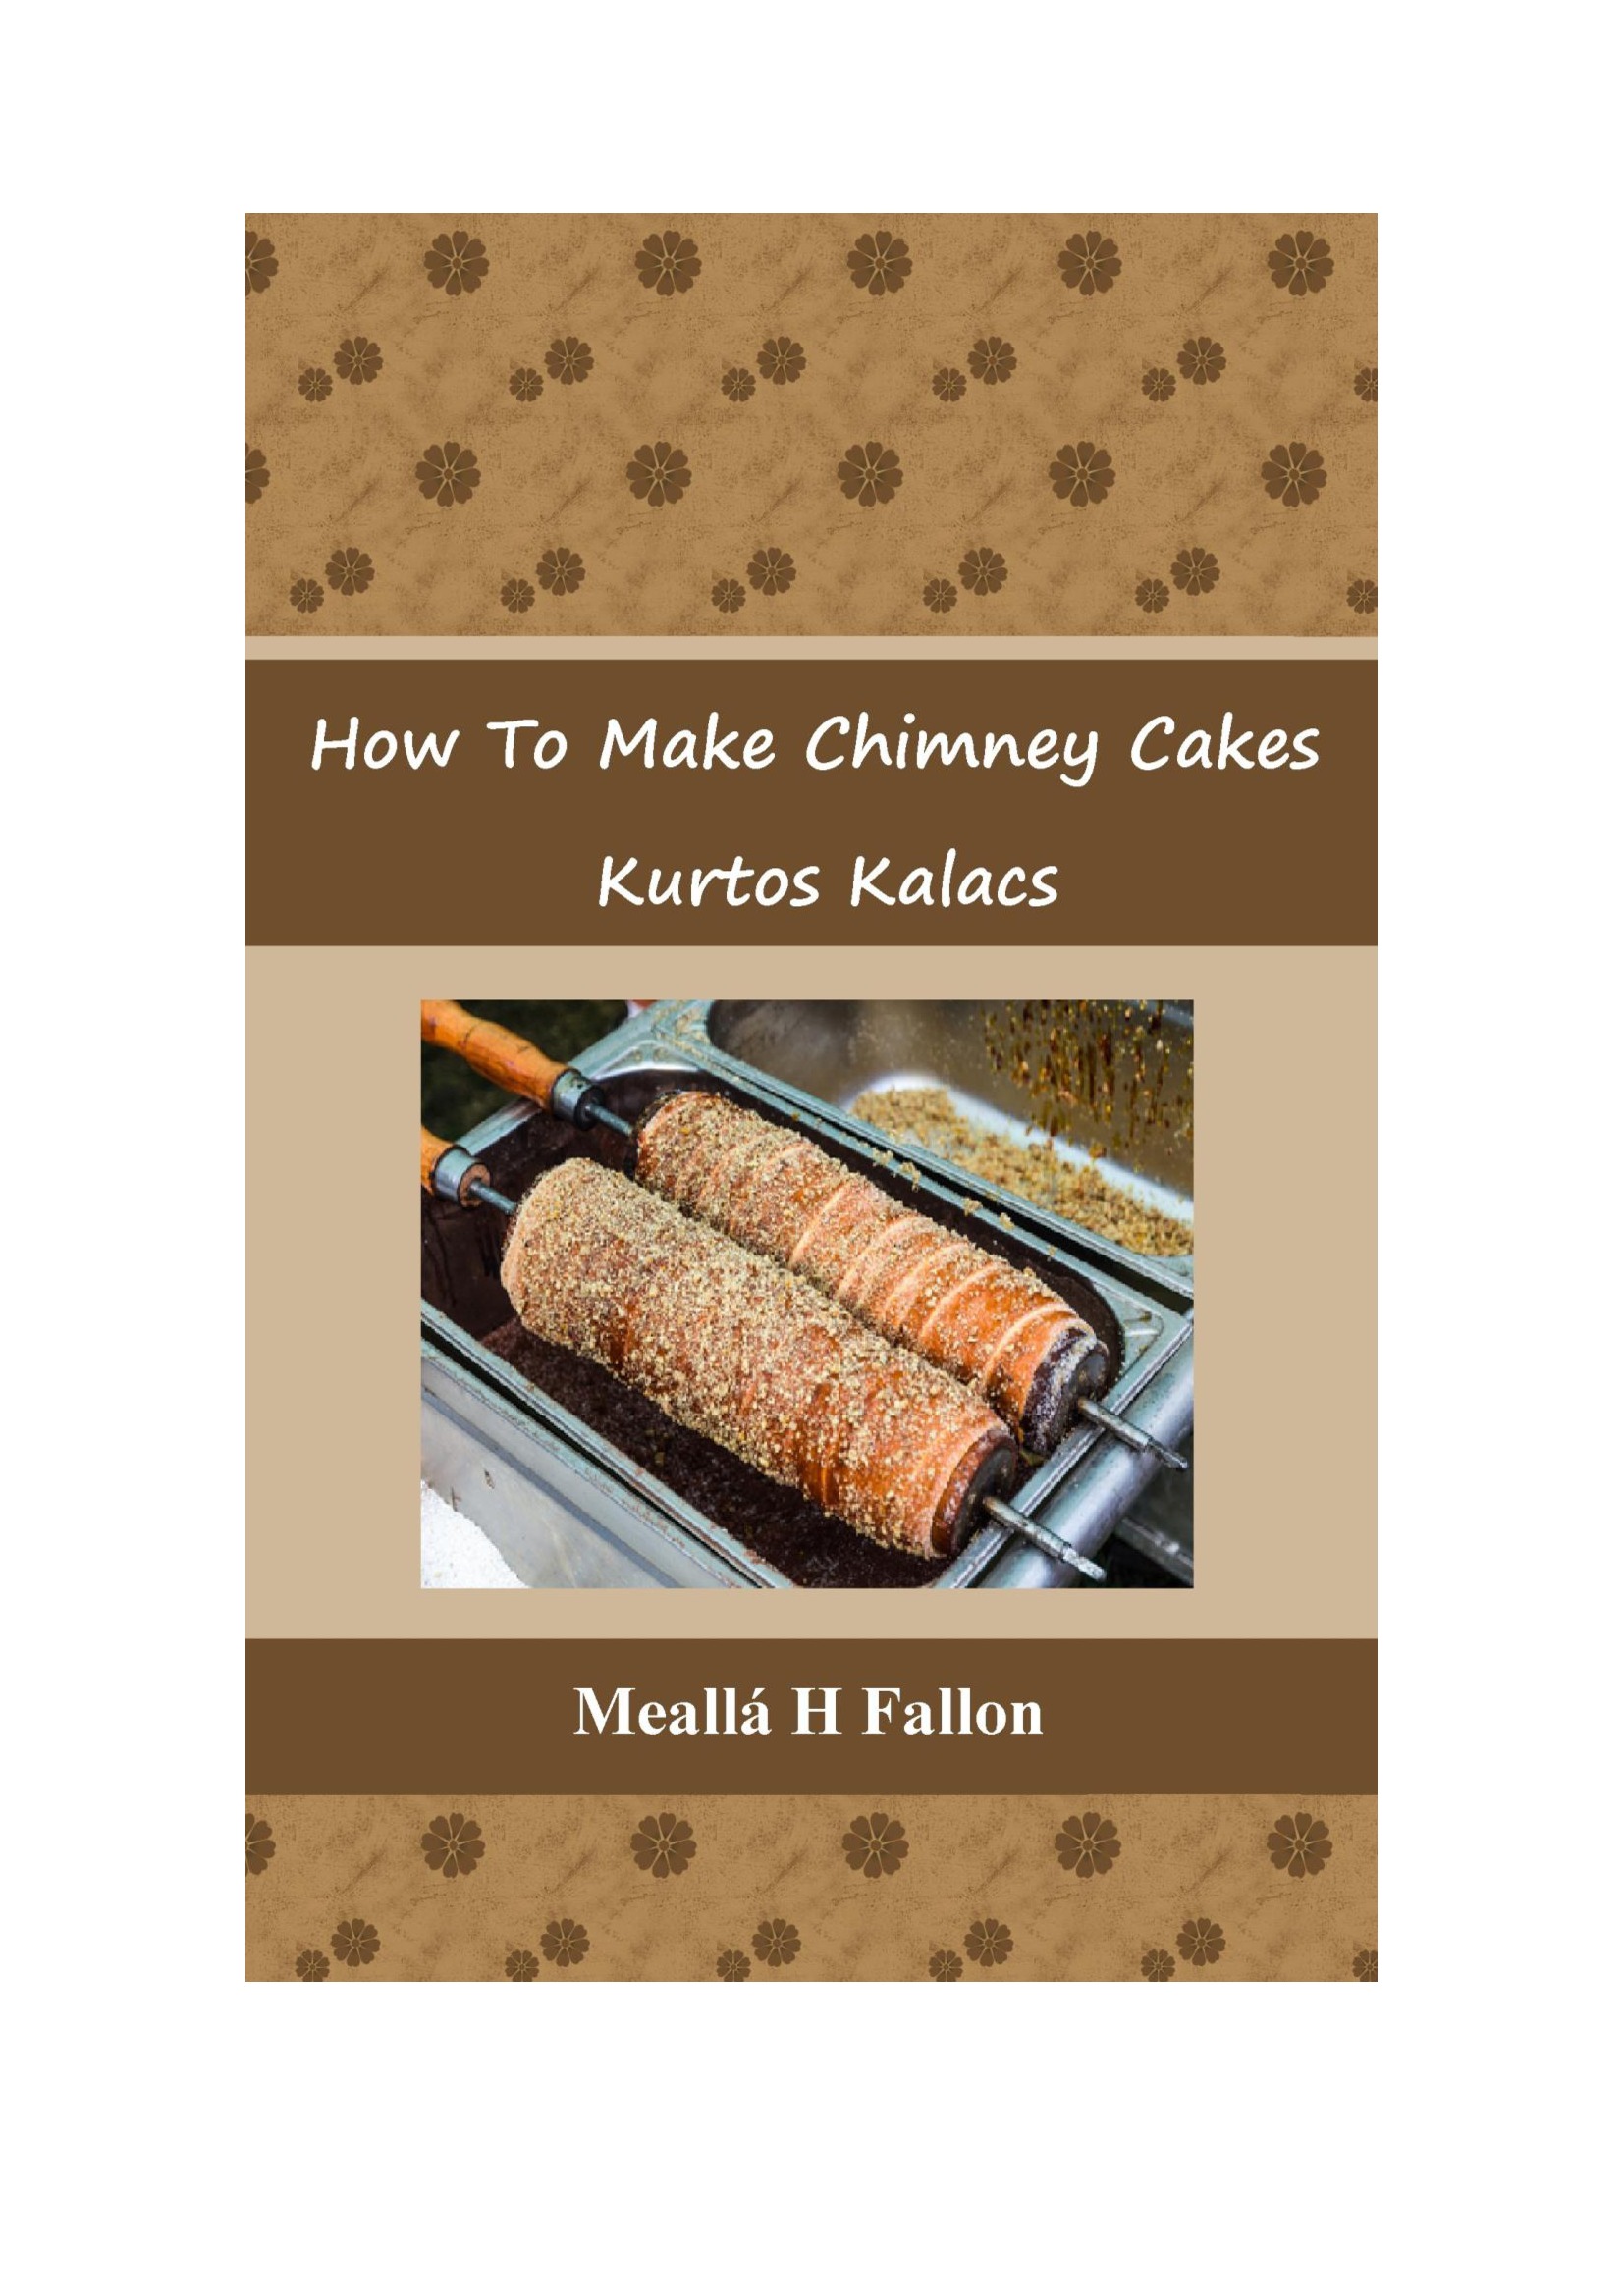 Kurtos Kalacs Making with Chimney Cake Easy Mix (video tutorial) - YouTube